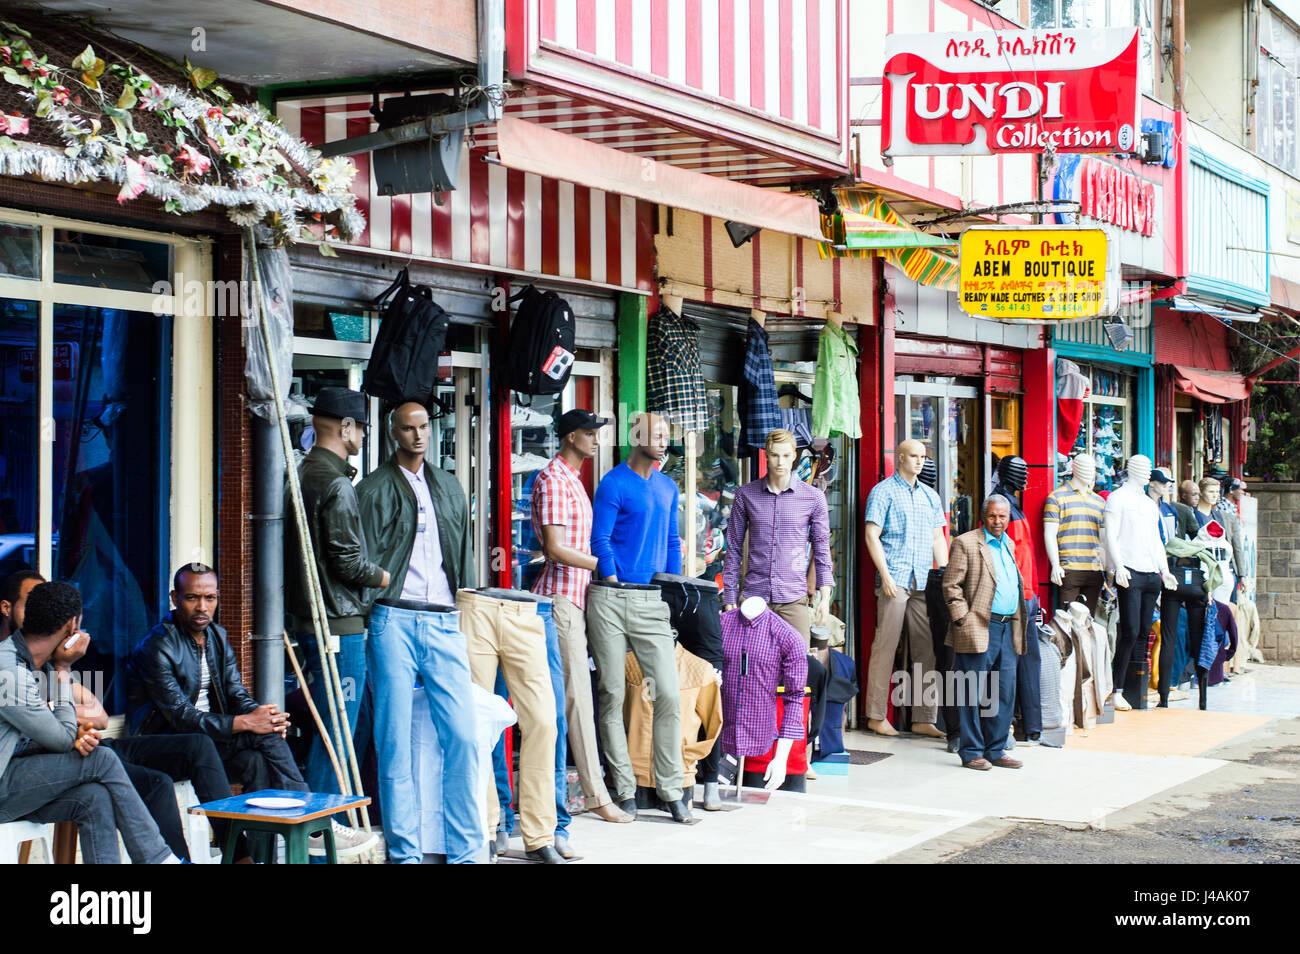 Street scene with menswear shops, Piazza, Addis Ababa, Ethiopia Stock Photo